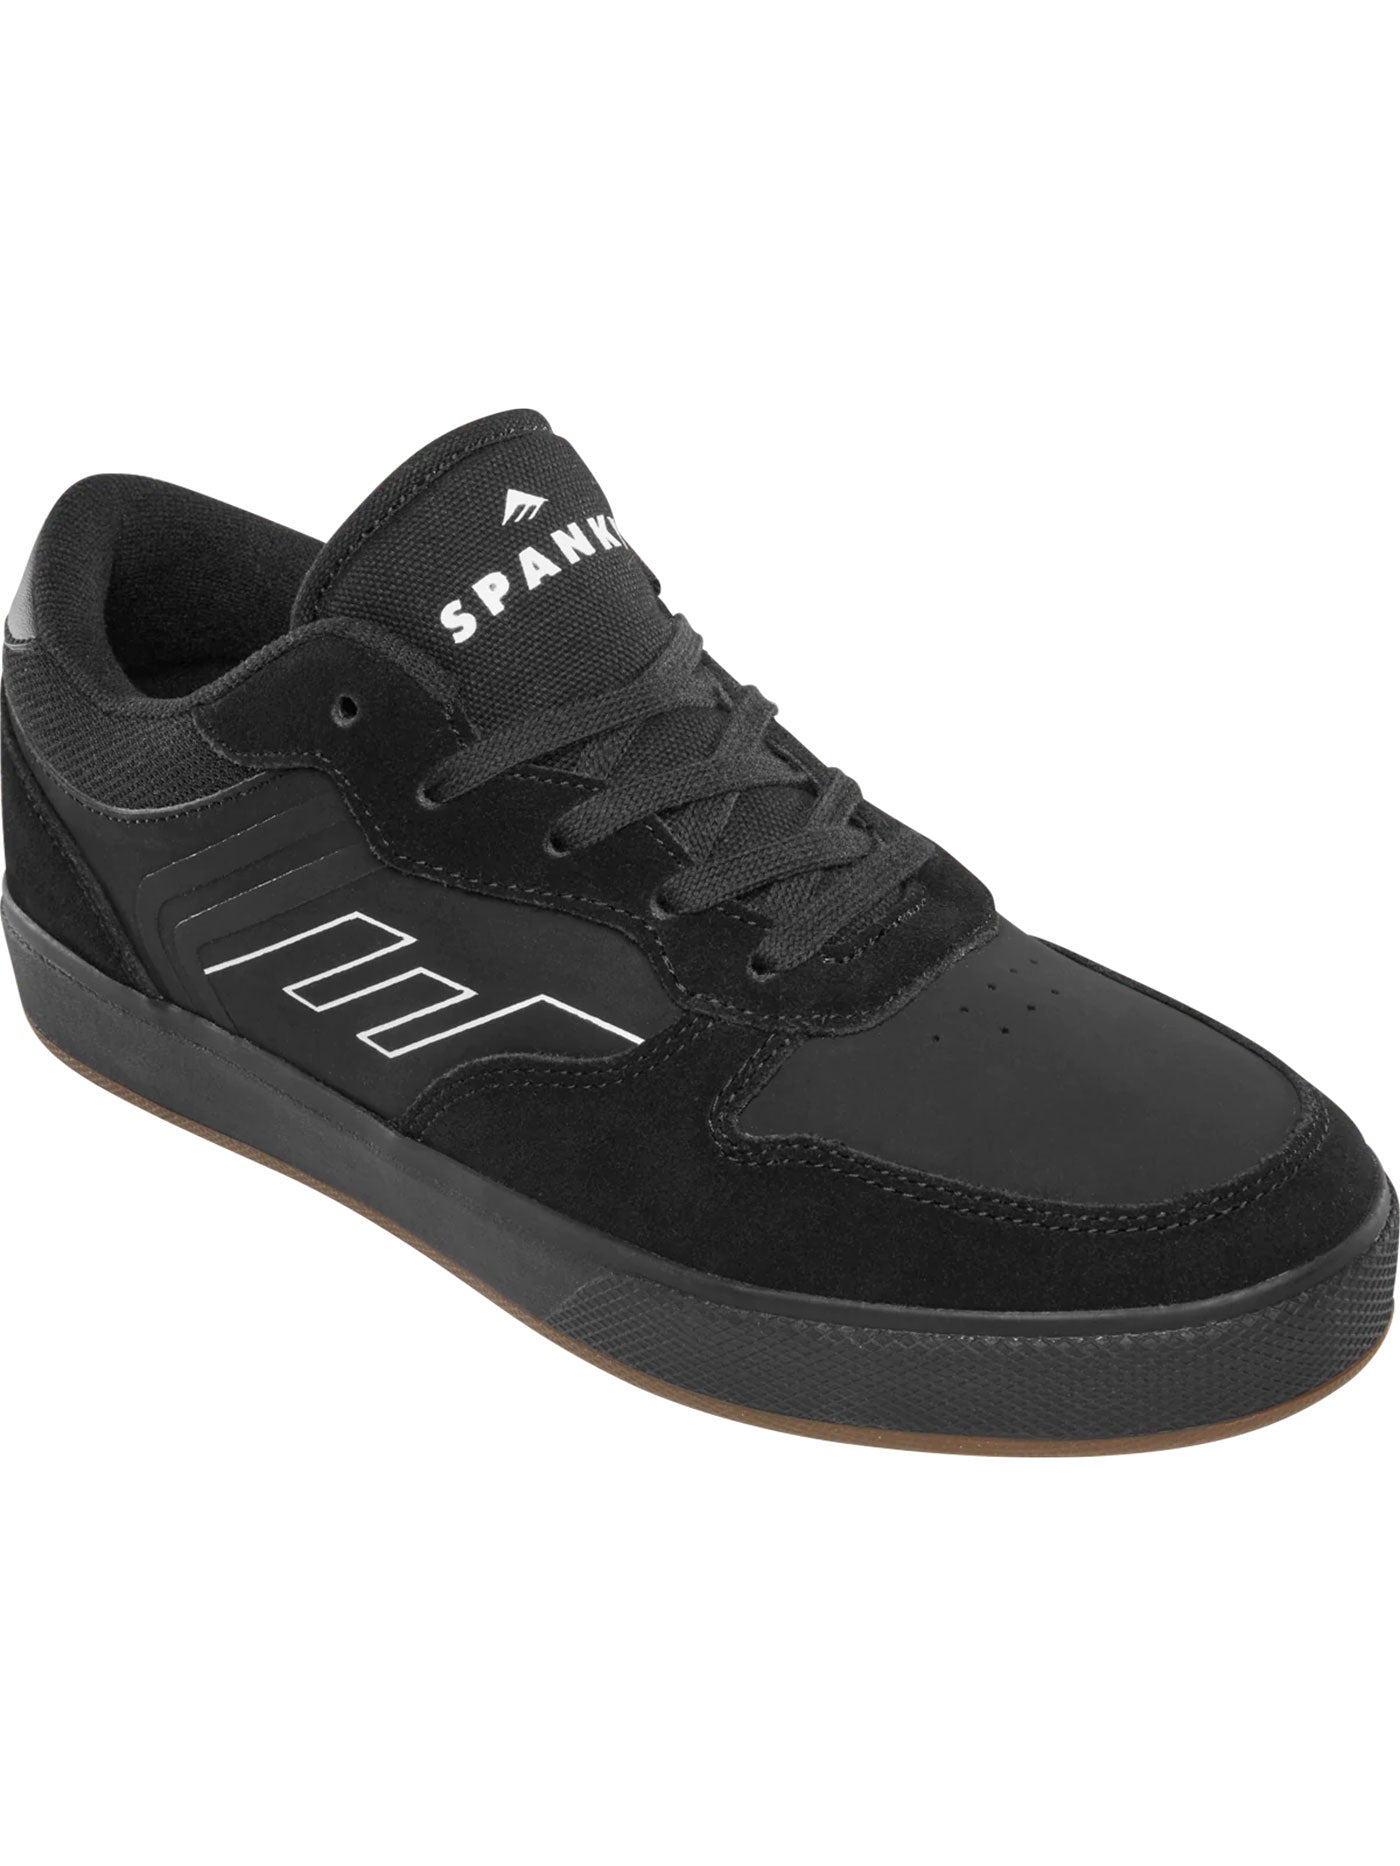 Emerica KSL G6 Black/Black/Gum Shoes